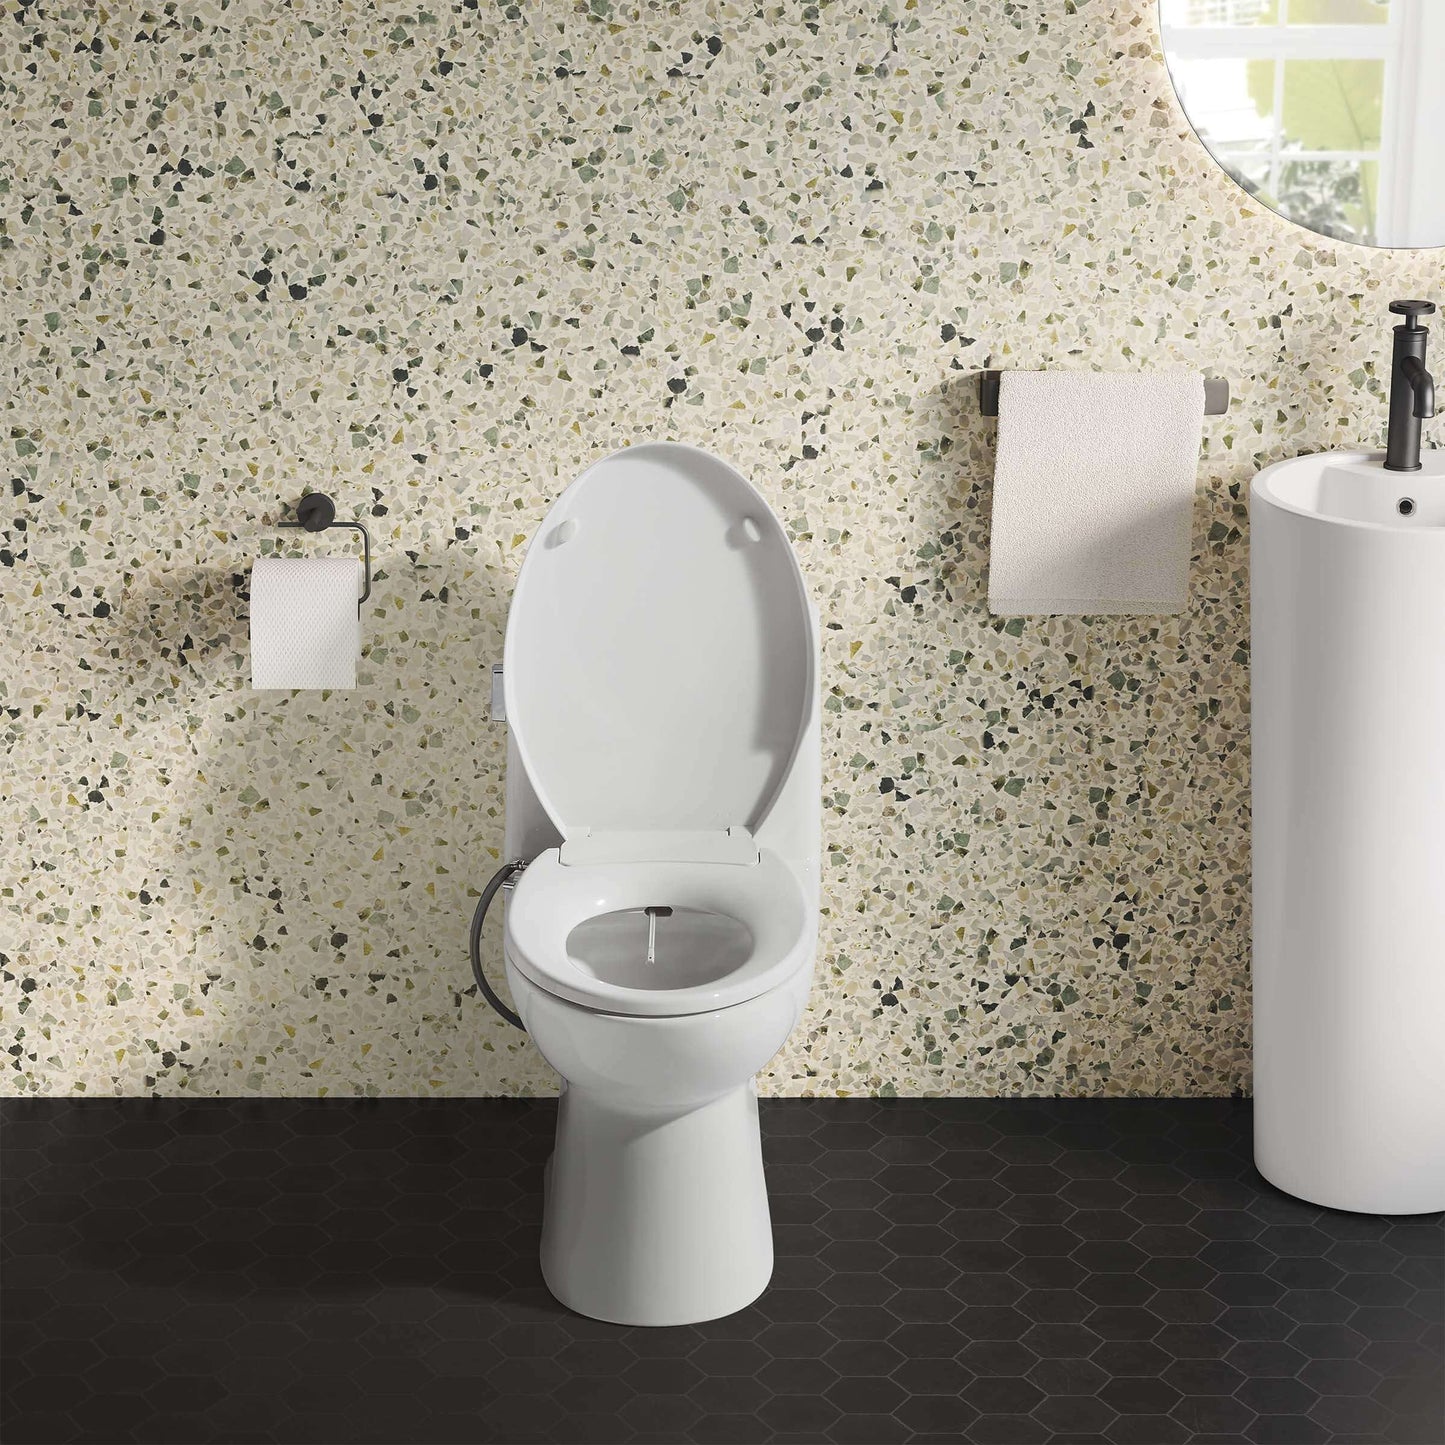 Aqua Non-Electric Smart Toilet Seat Bidet - front view attached to open toilet